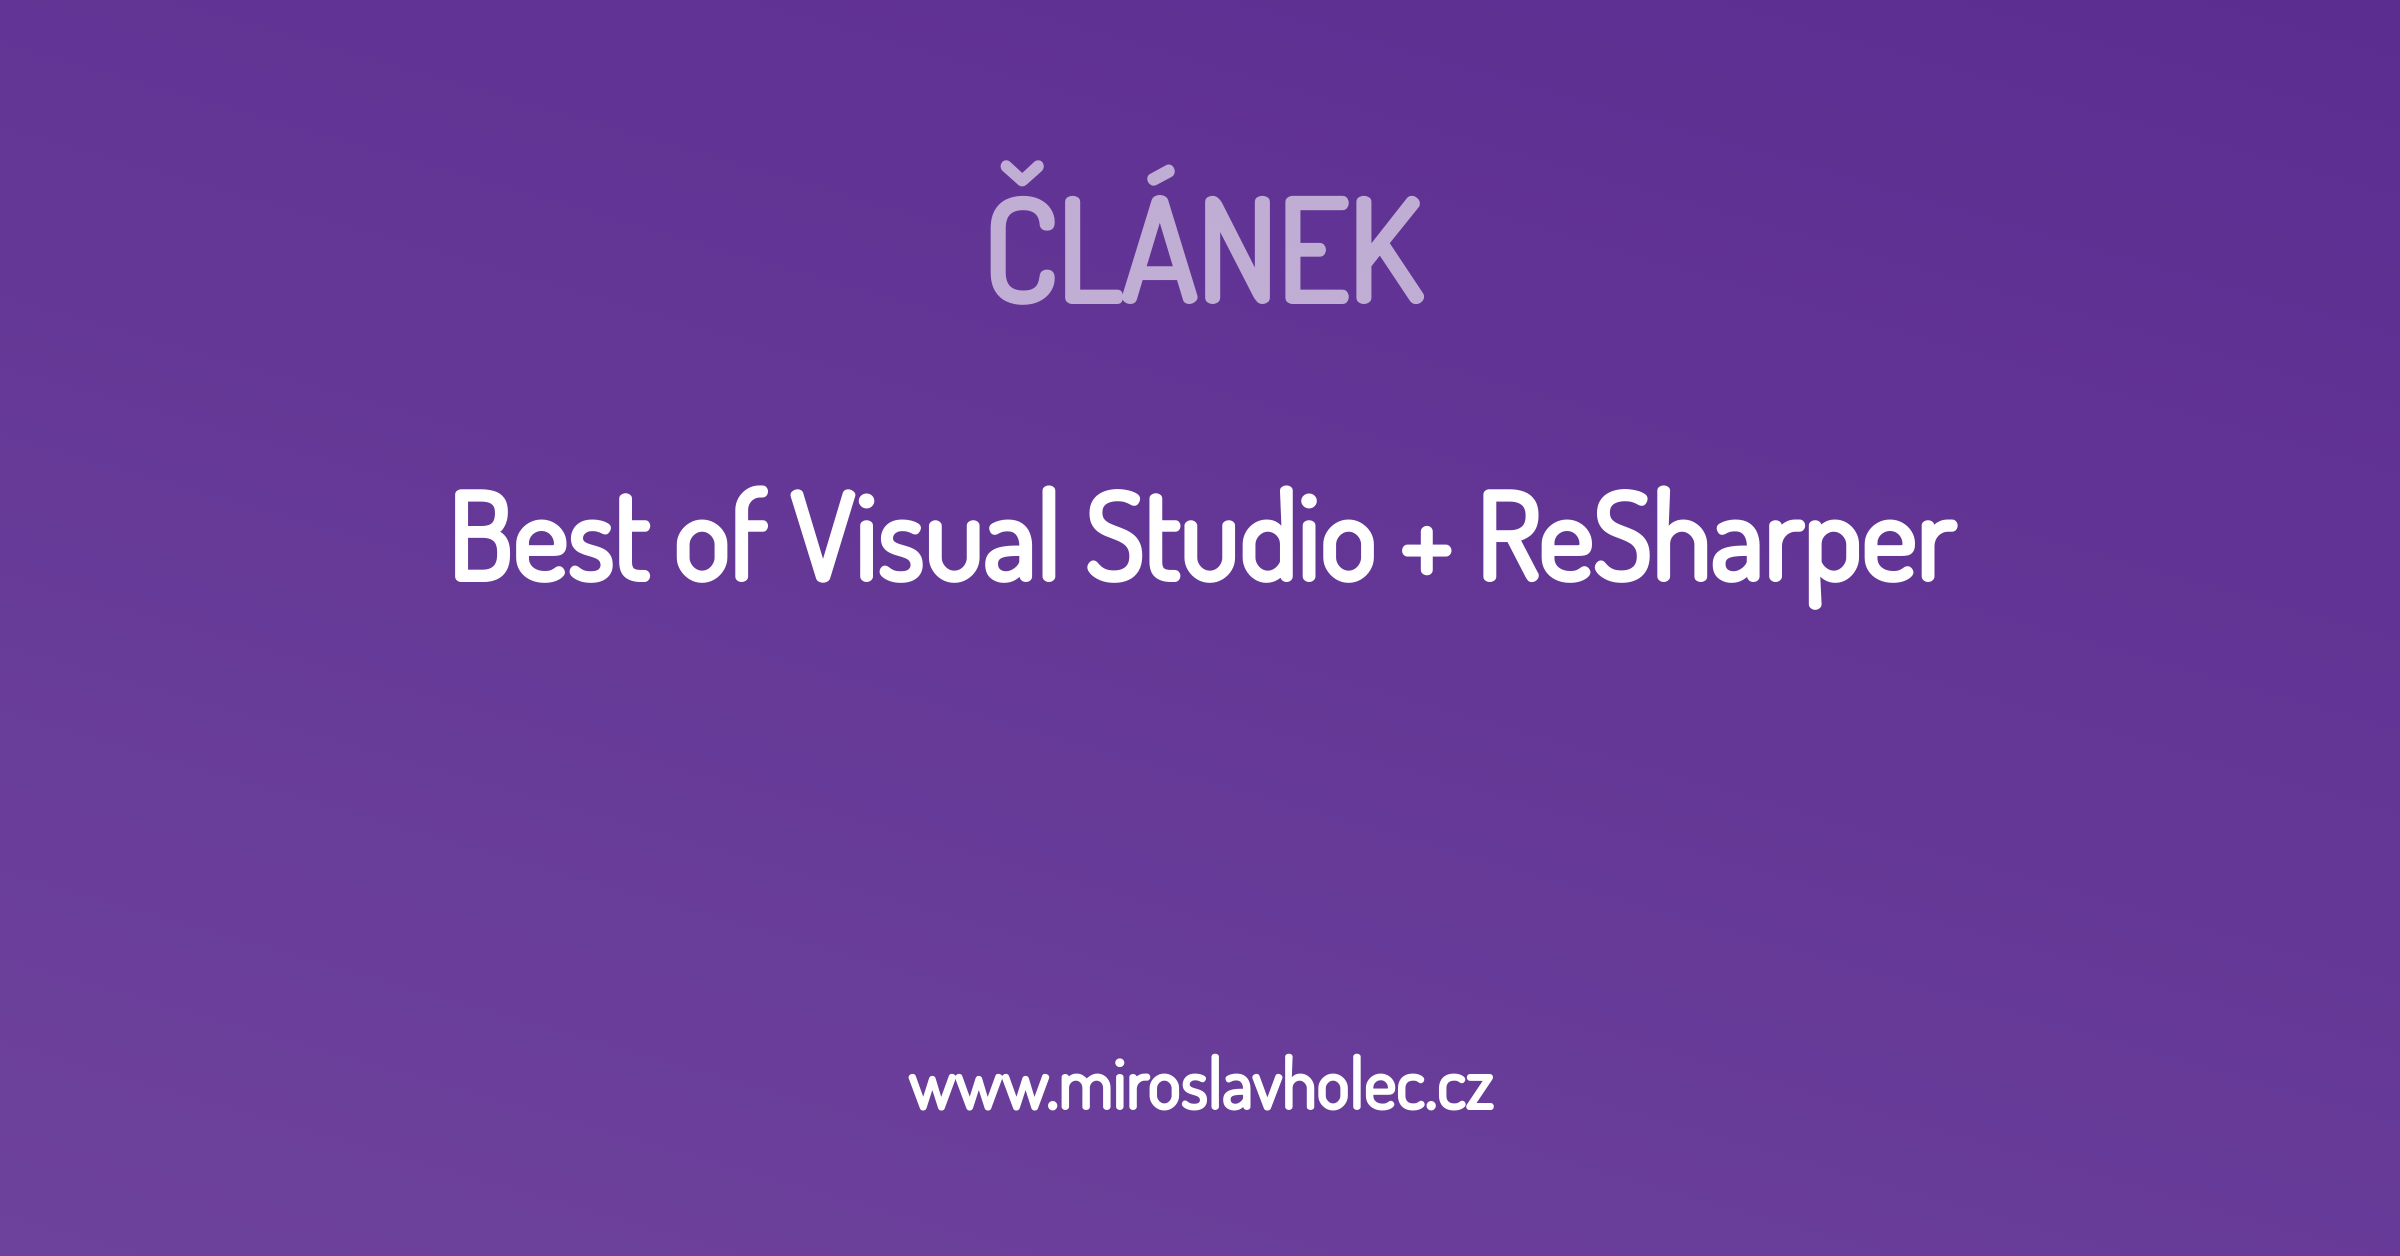 download resharper visual studio 2019